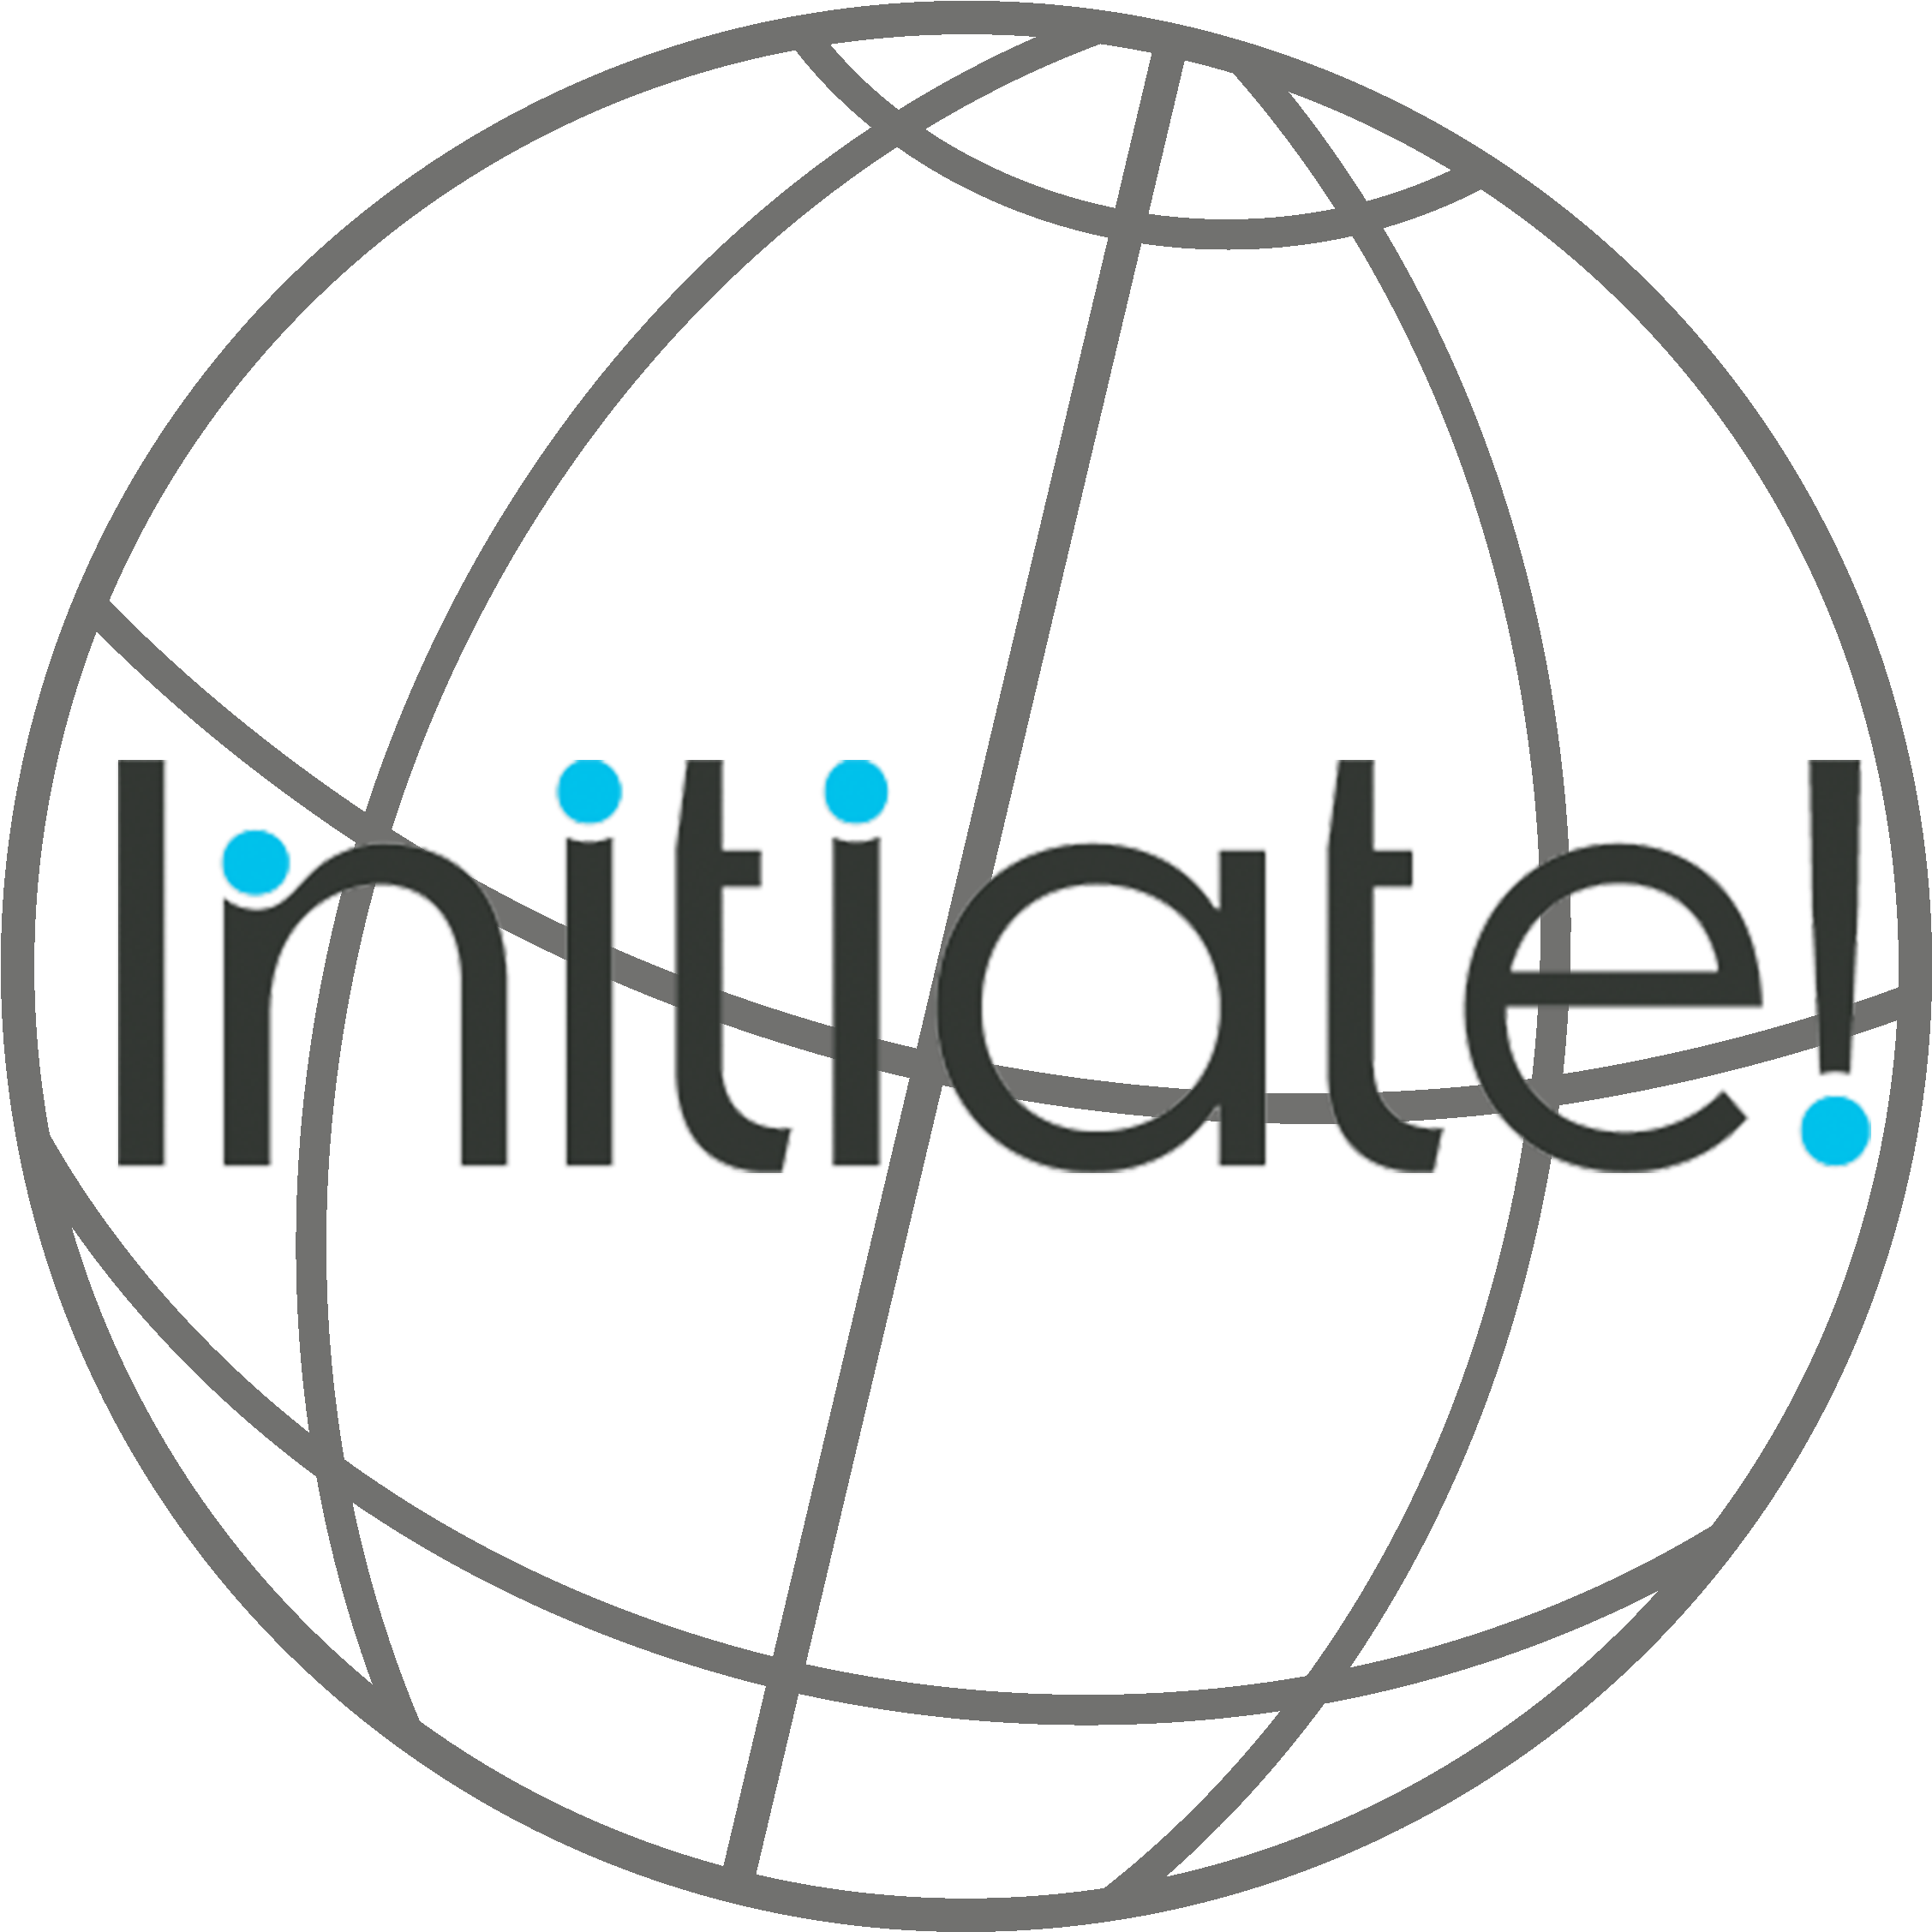 Initiate logo Enlit Europe